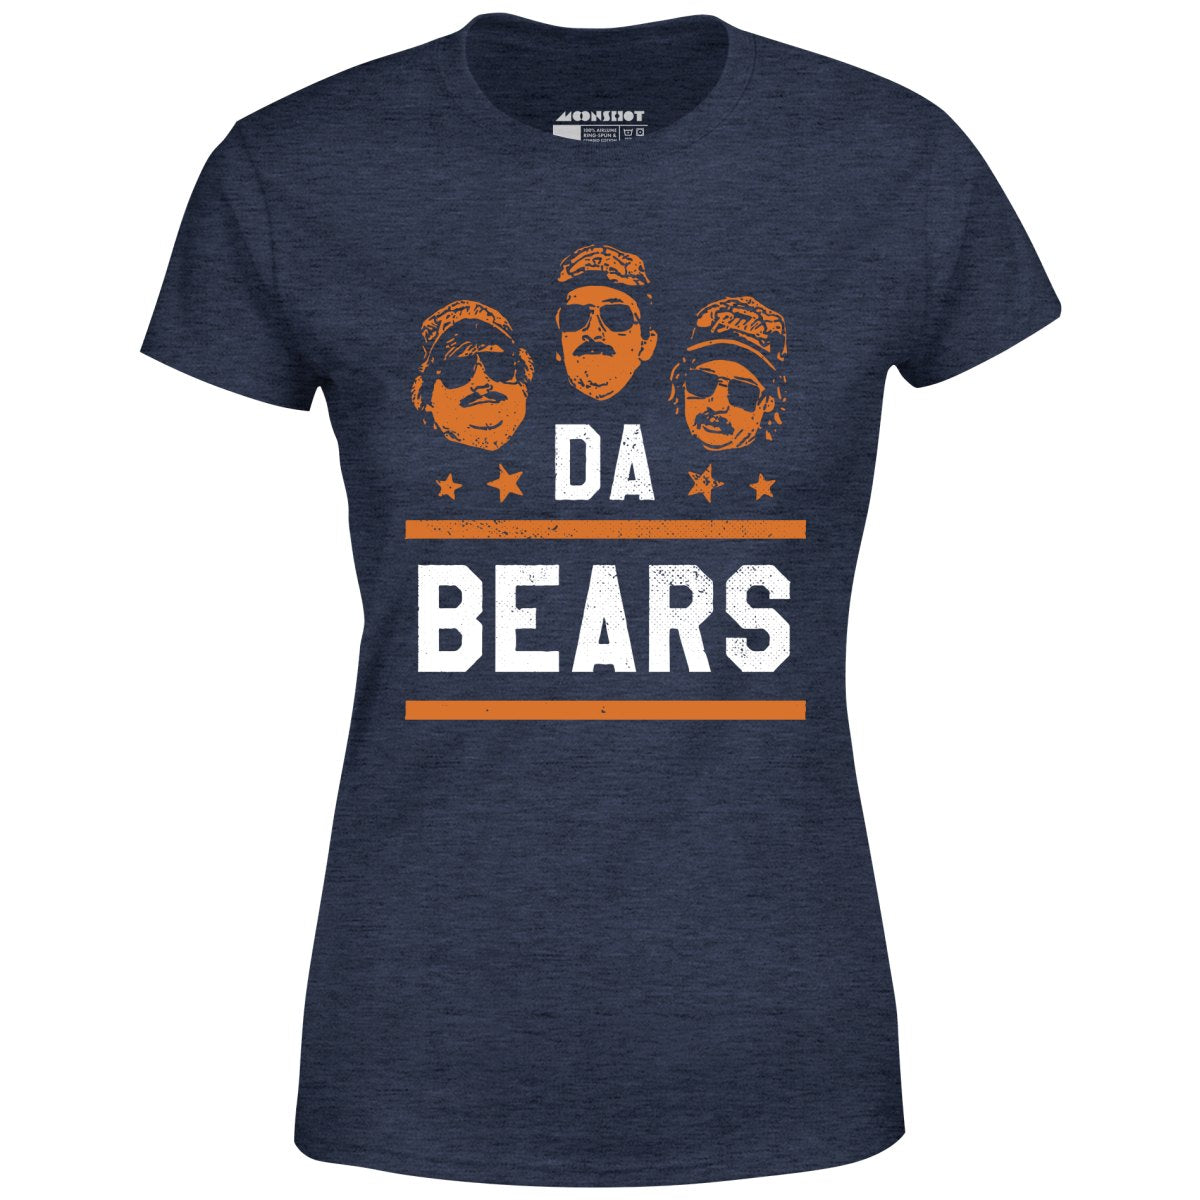 Da Bears - Women's T-Shirt